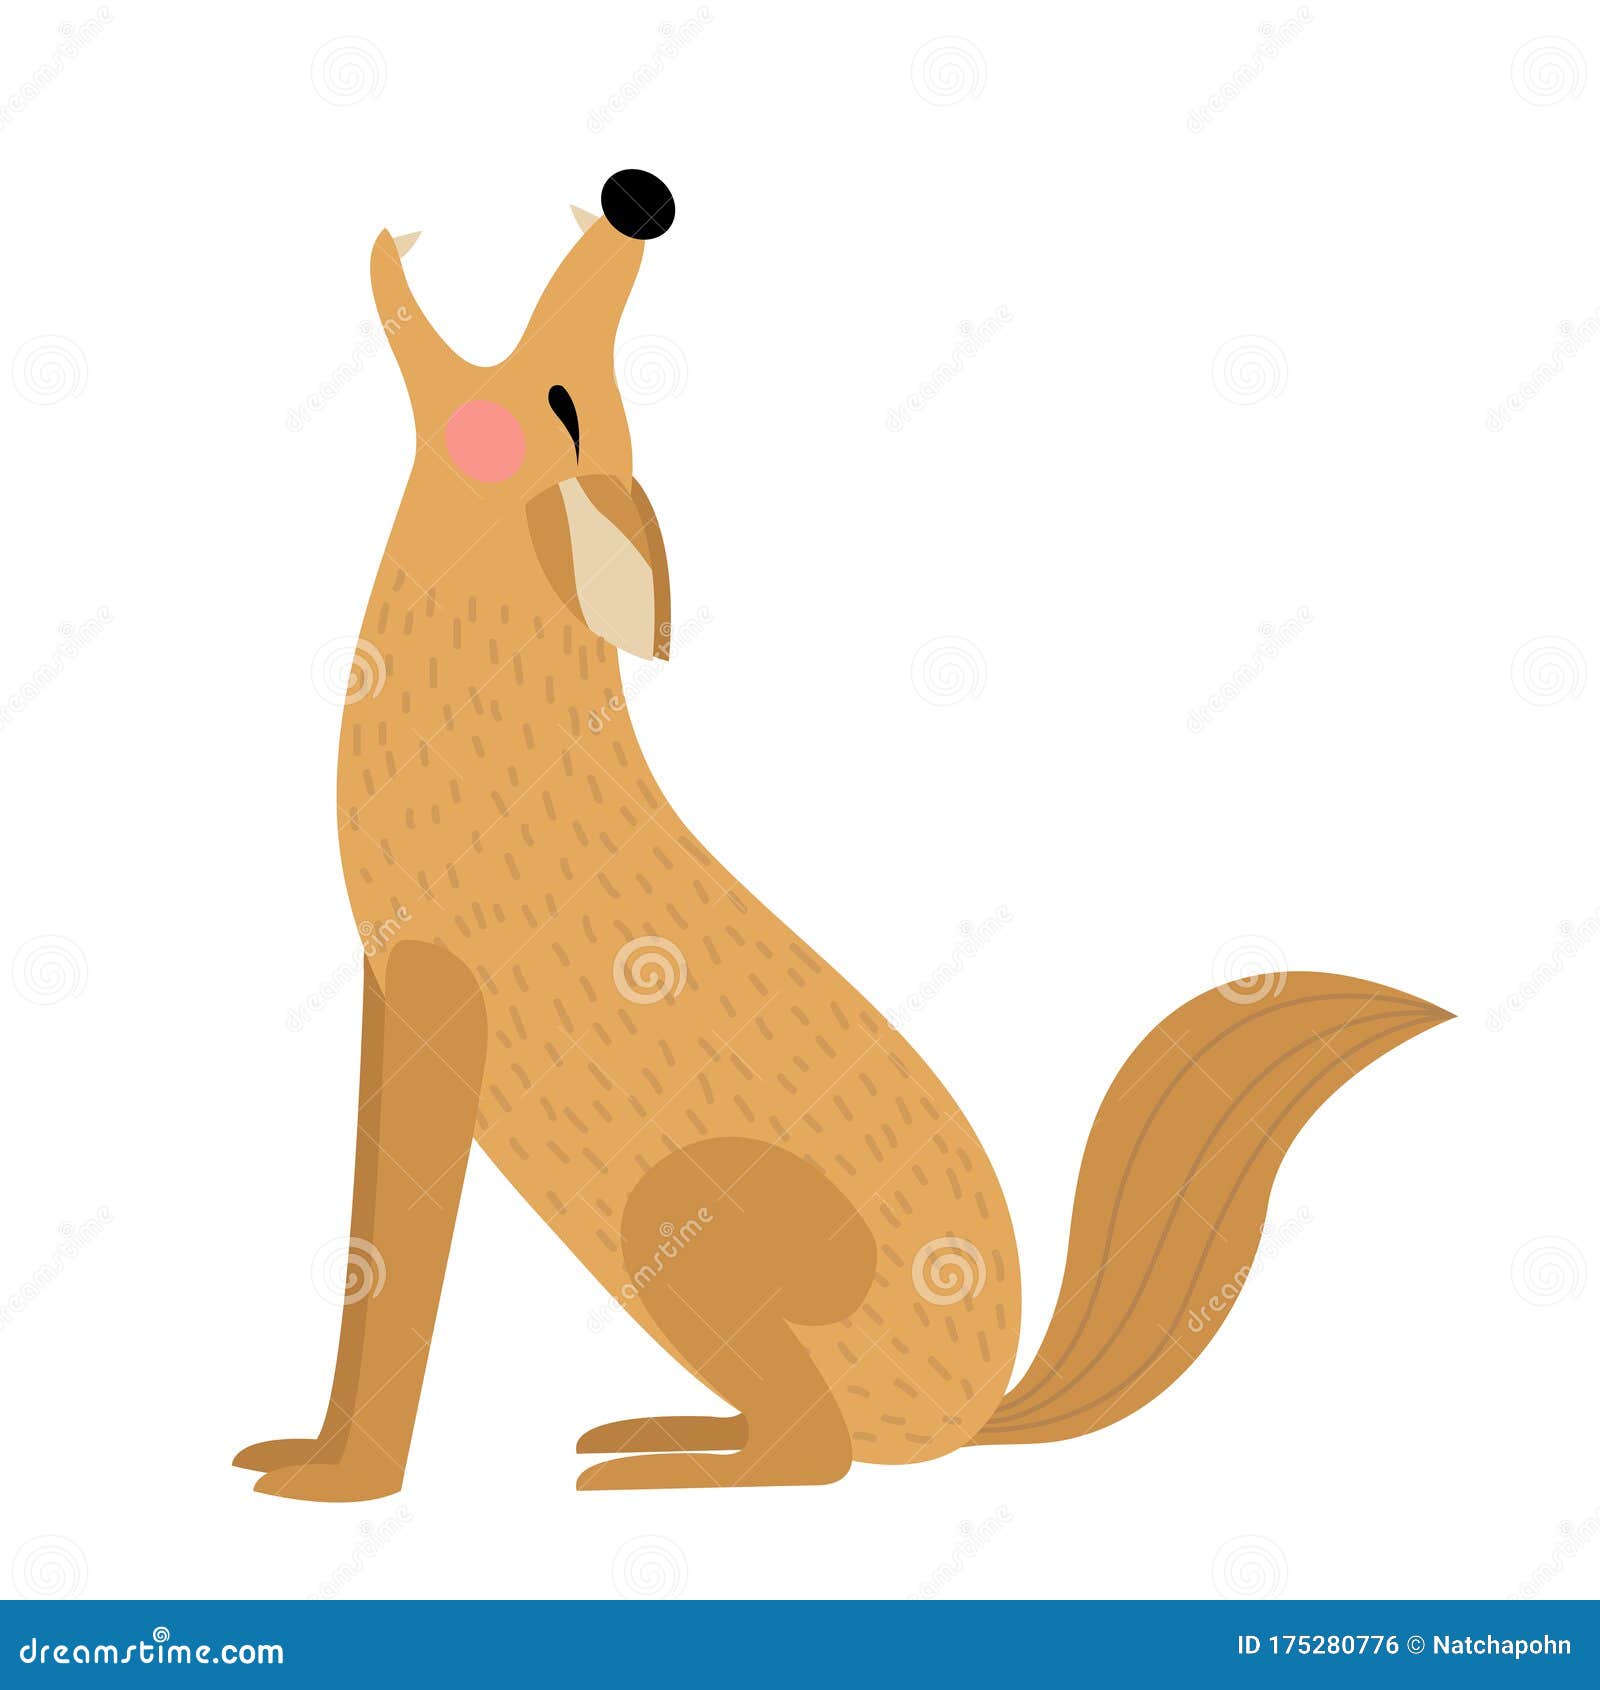 Howling Coyote Animal Cartoon Character Vector Illustration Stock Vector -  Illustration of design, coywolf: 175280776